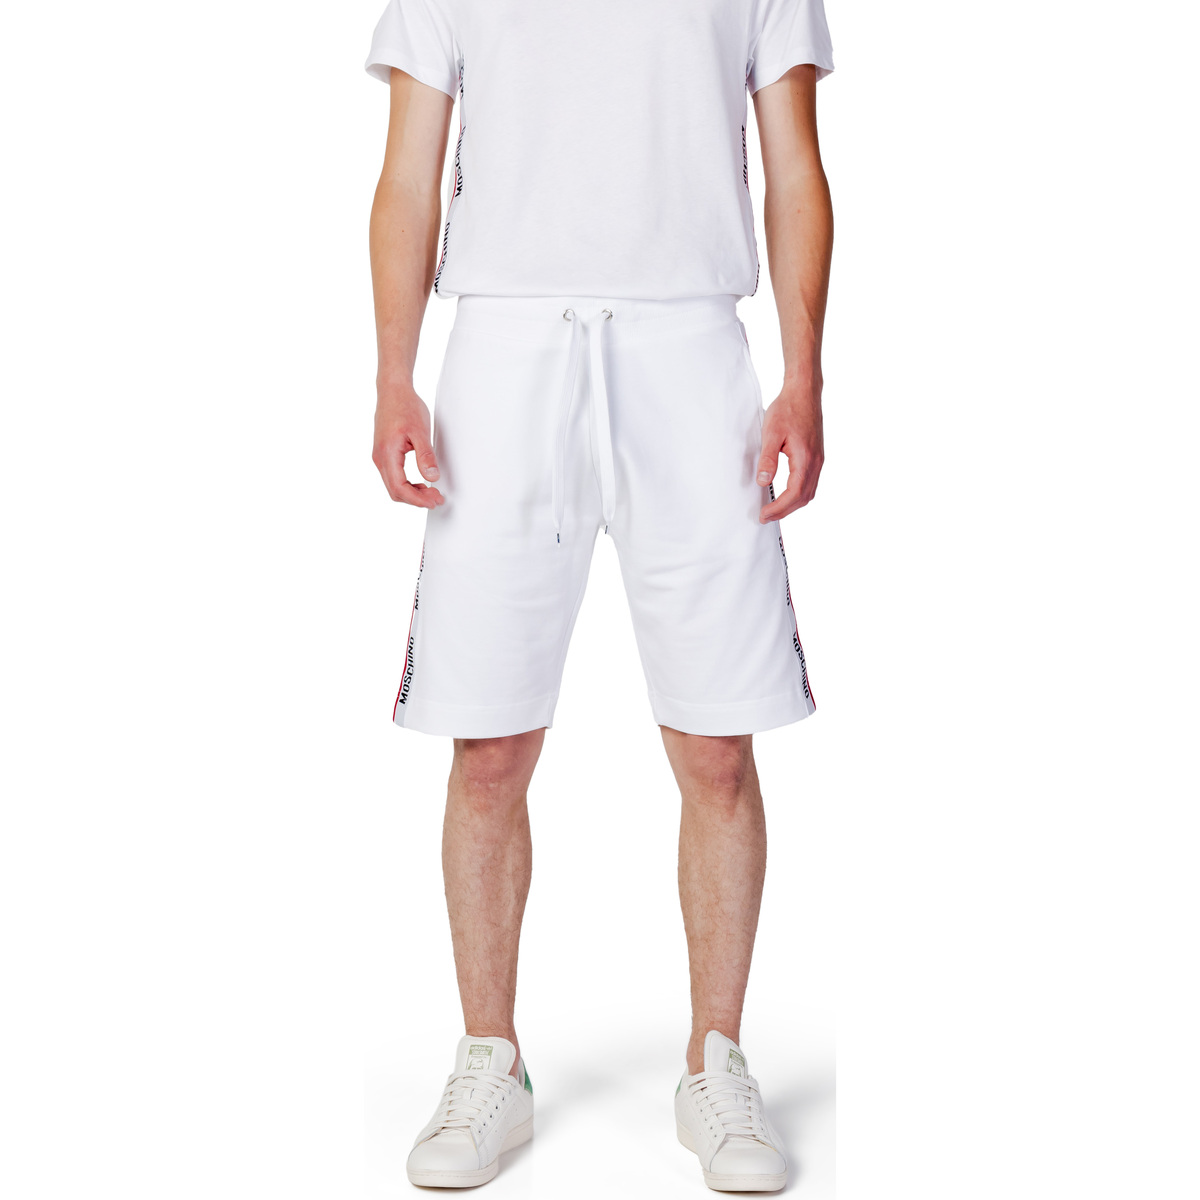 Abbigliamento Uomo Shorts / Bermuda Moschino V1A6885 4409 Bianco